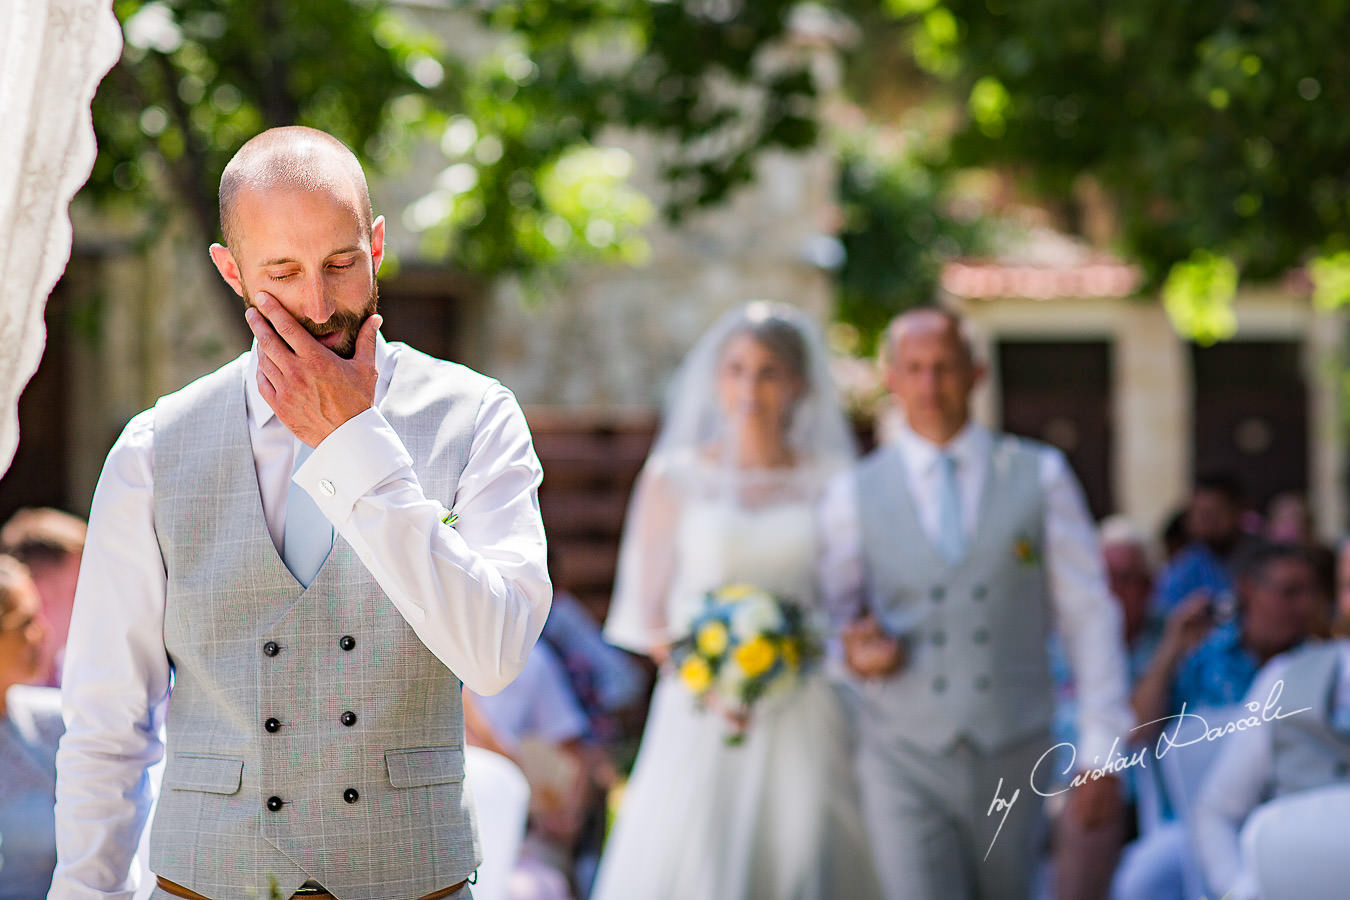 Wedding moments captured at a Vasilias Nikoklis Inn Wedding in Paphos. Cyprus Wedding Photography by Cristian Dascalu.